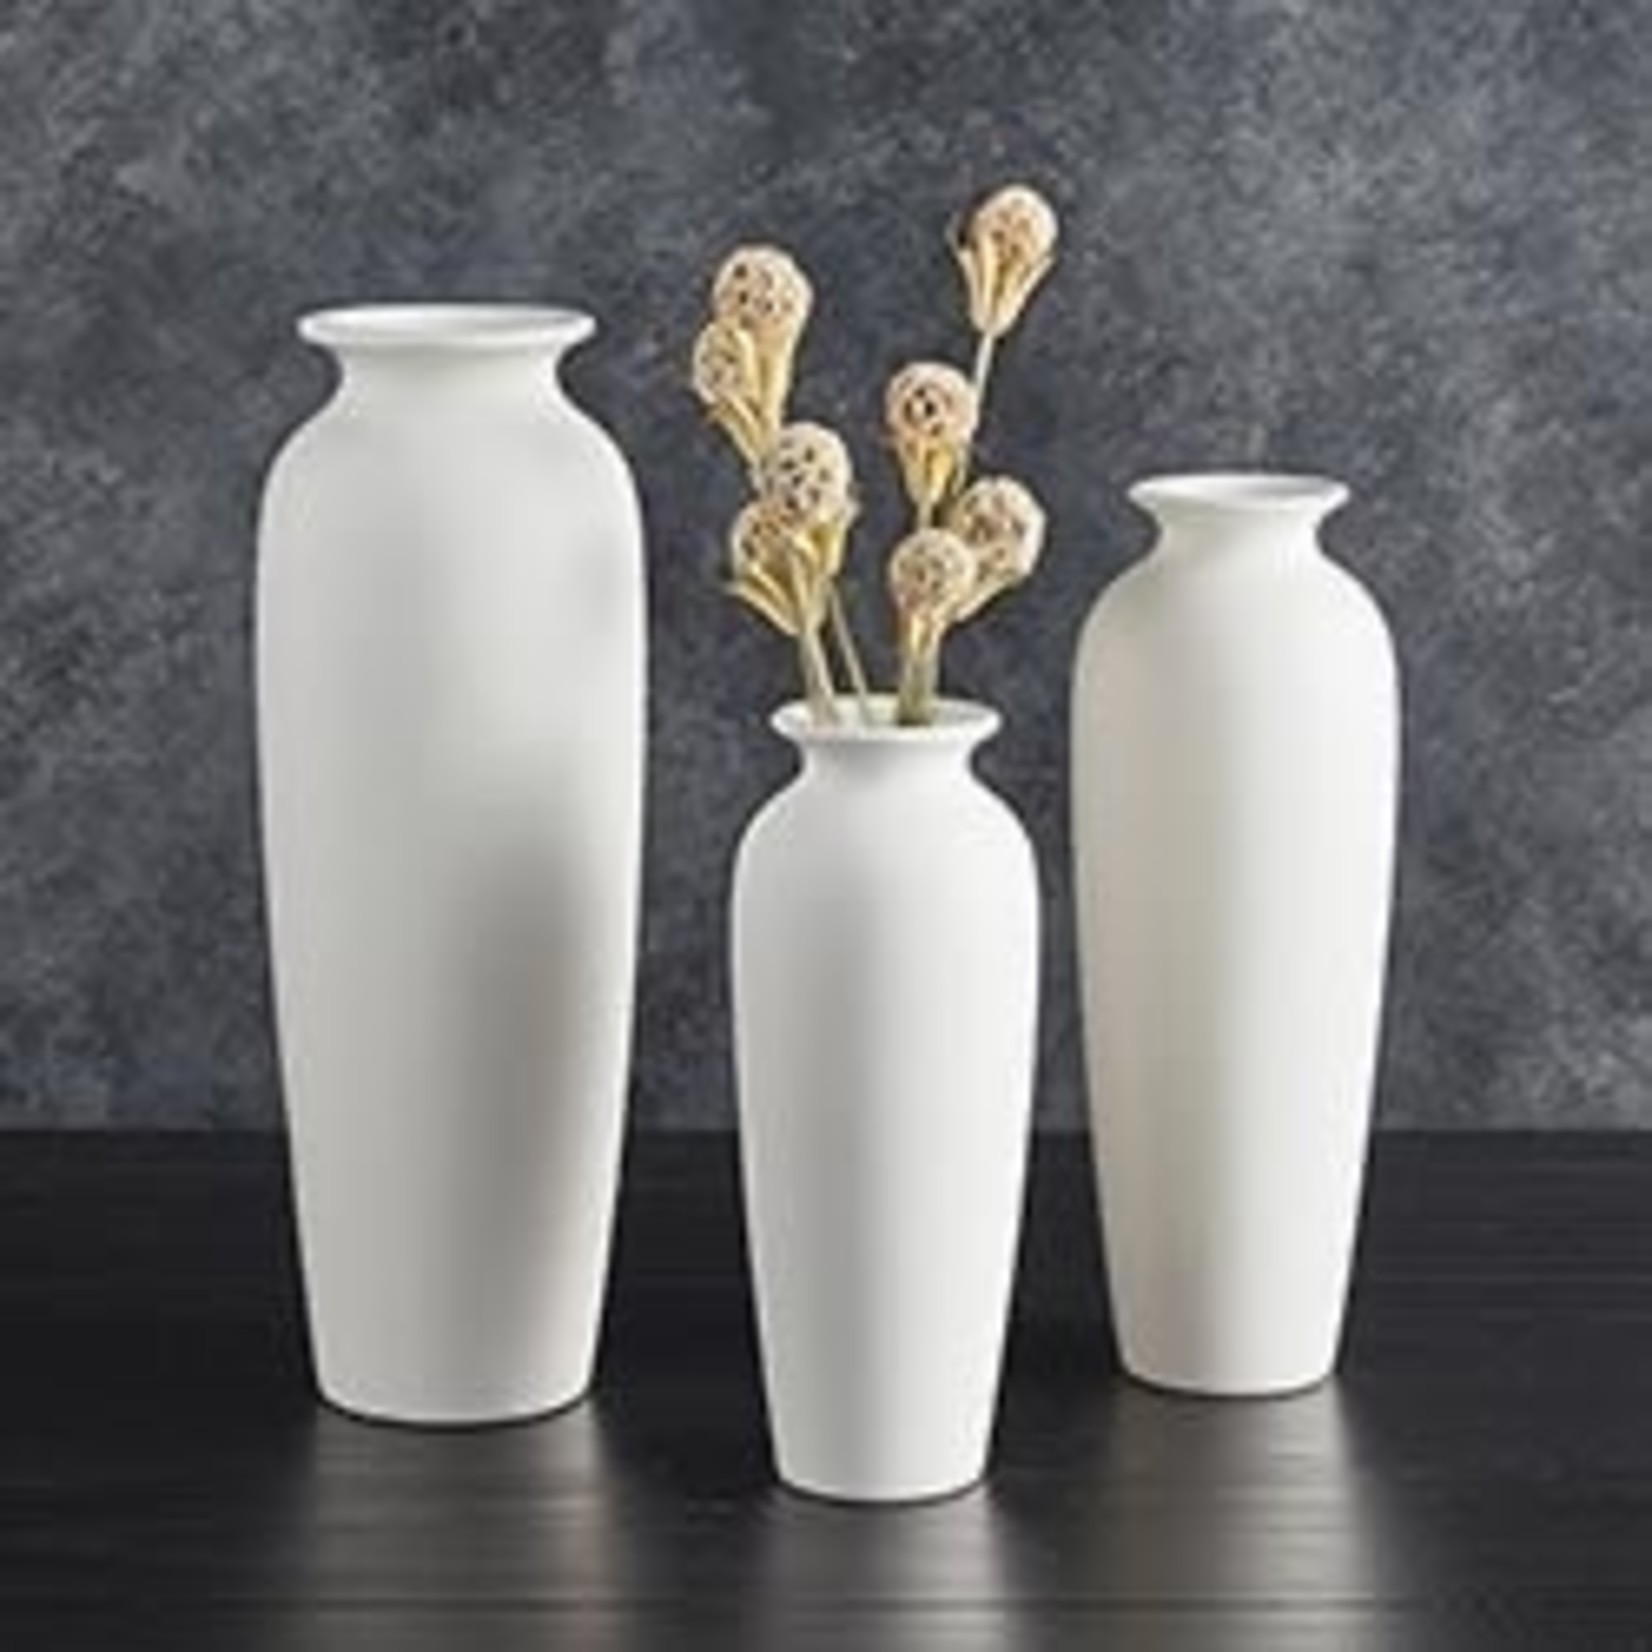 47th & Main Matte White Tall Vase - Set of 3